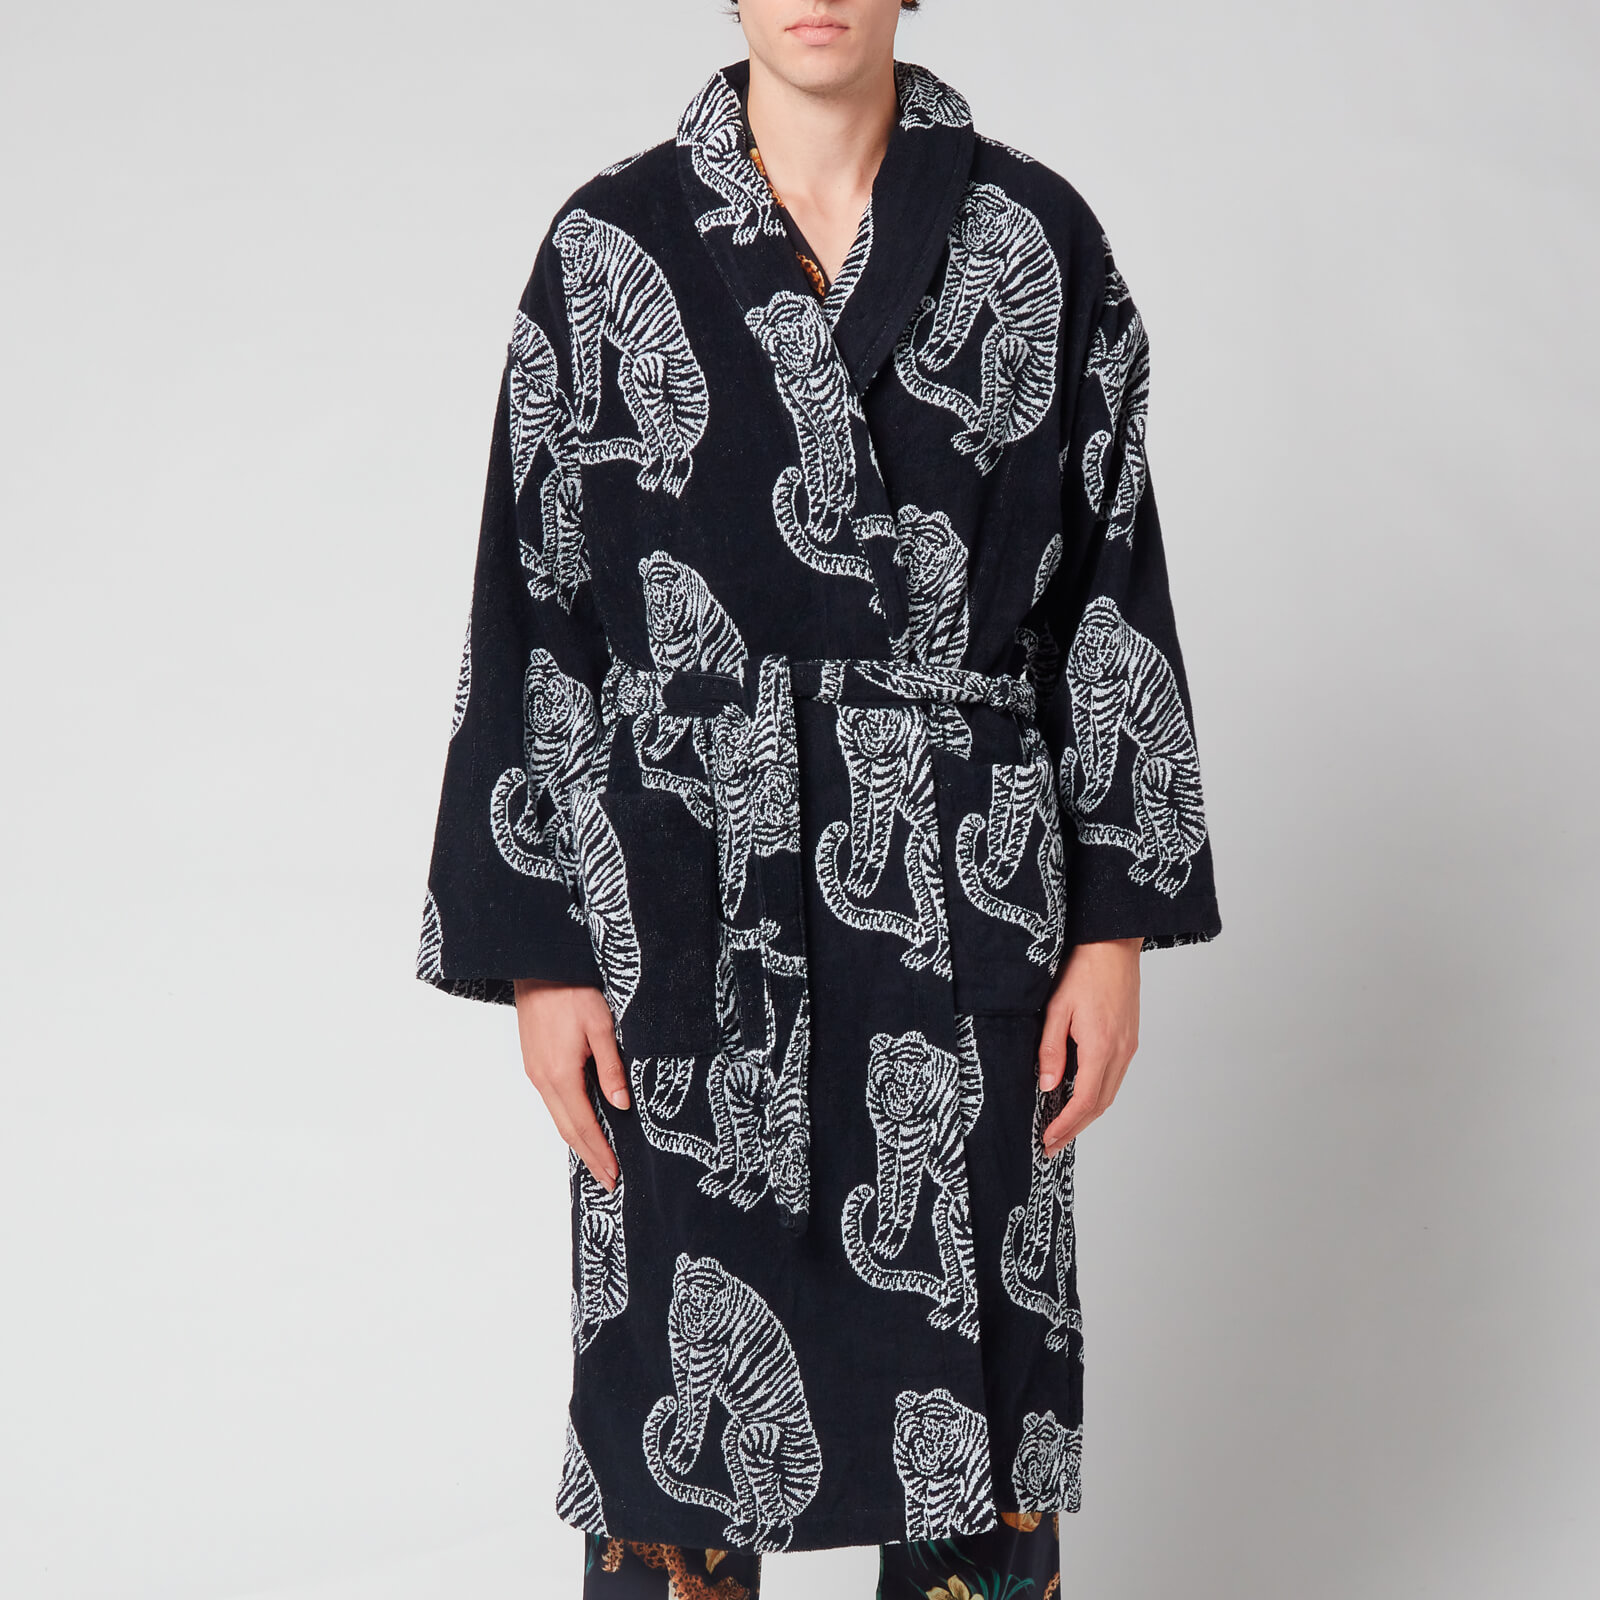 Desmond & Dempsey Men's Tiger Print Towel Robe - Black/Cream - S